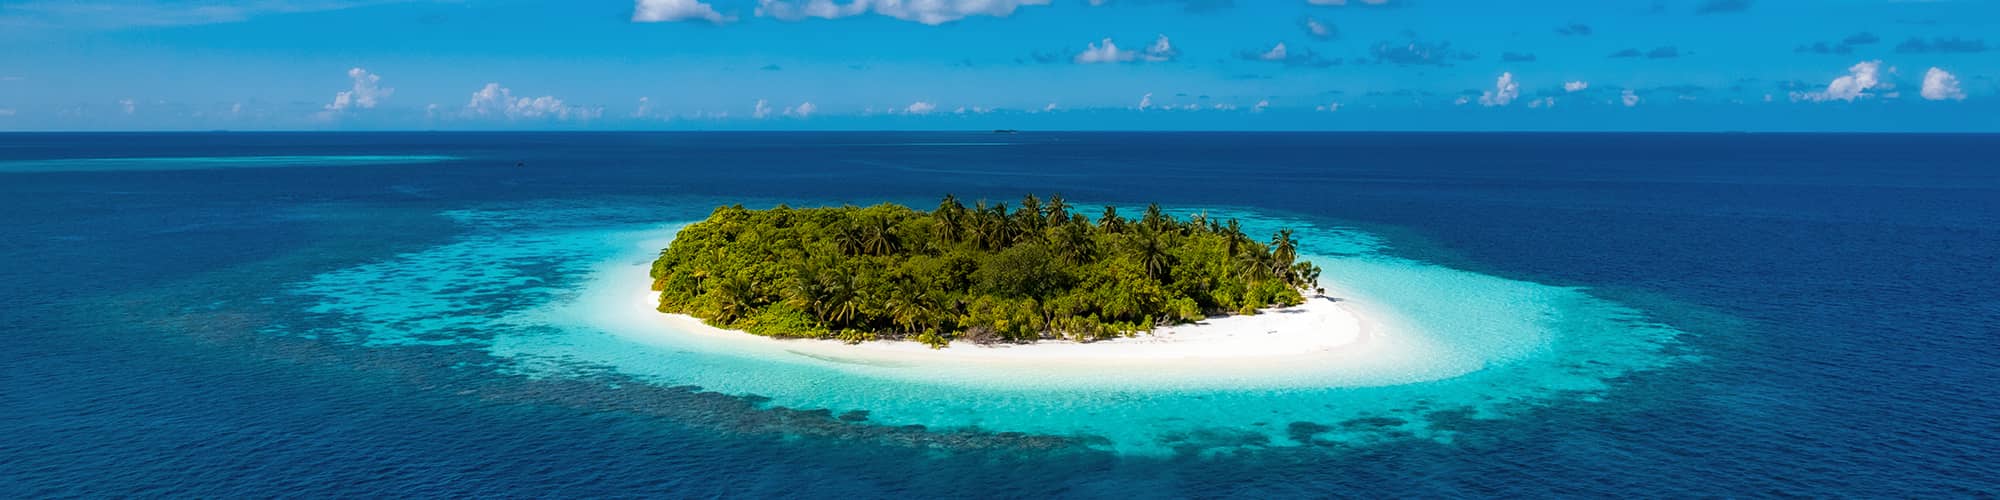 Navigation Maldives © Freesurf / Adobe Stock